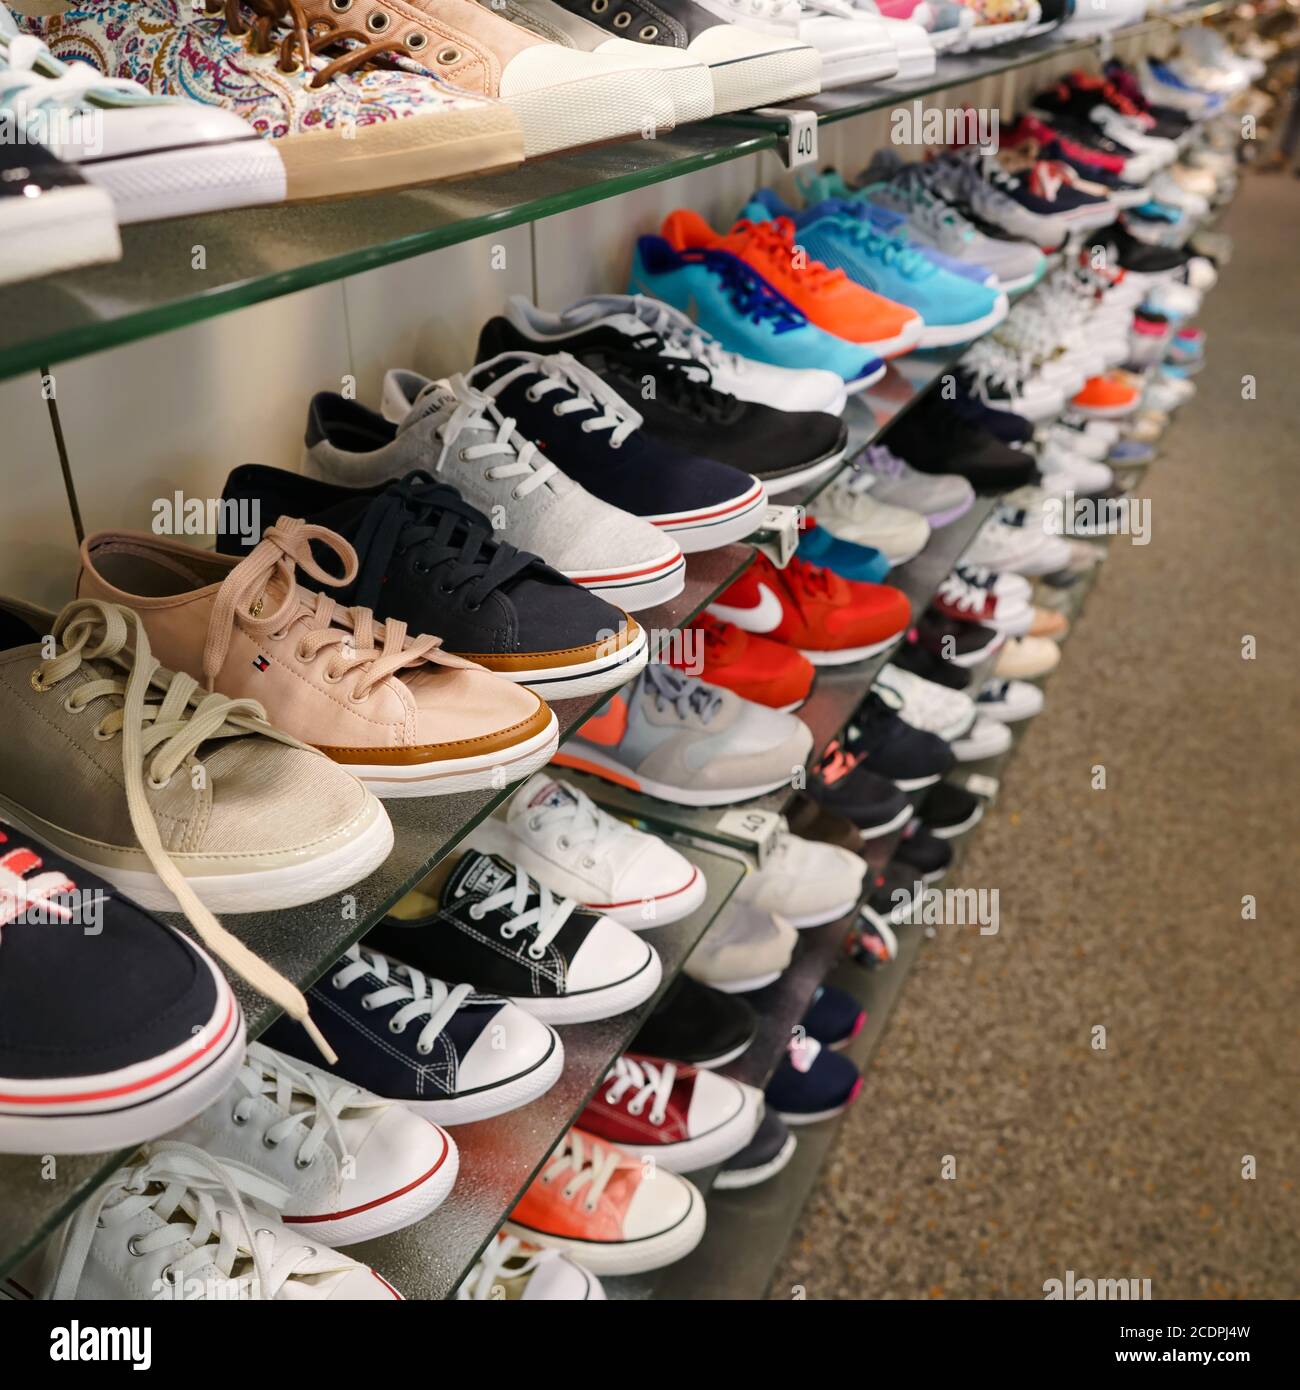 Deichmann shoes hi-res photography images - Alamy